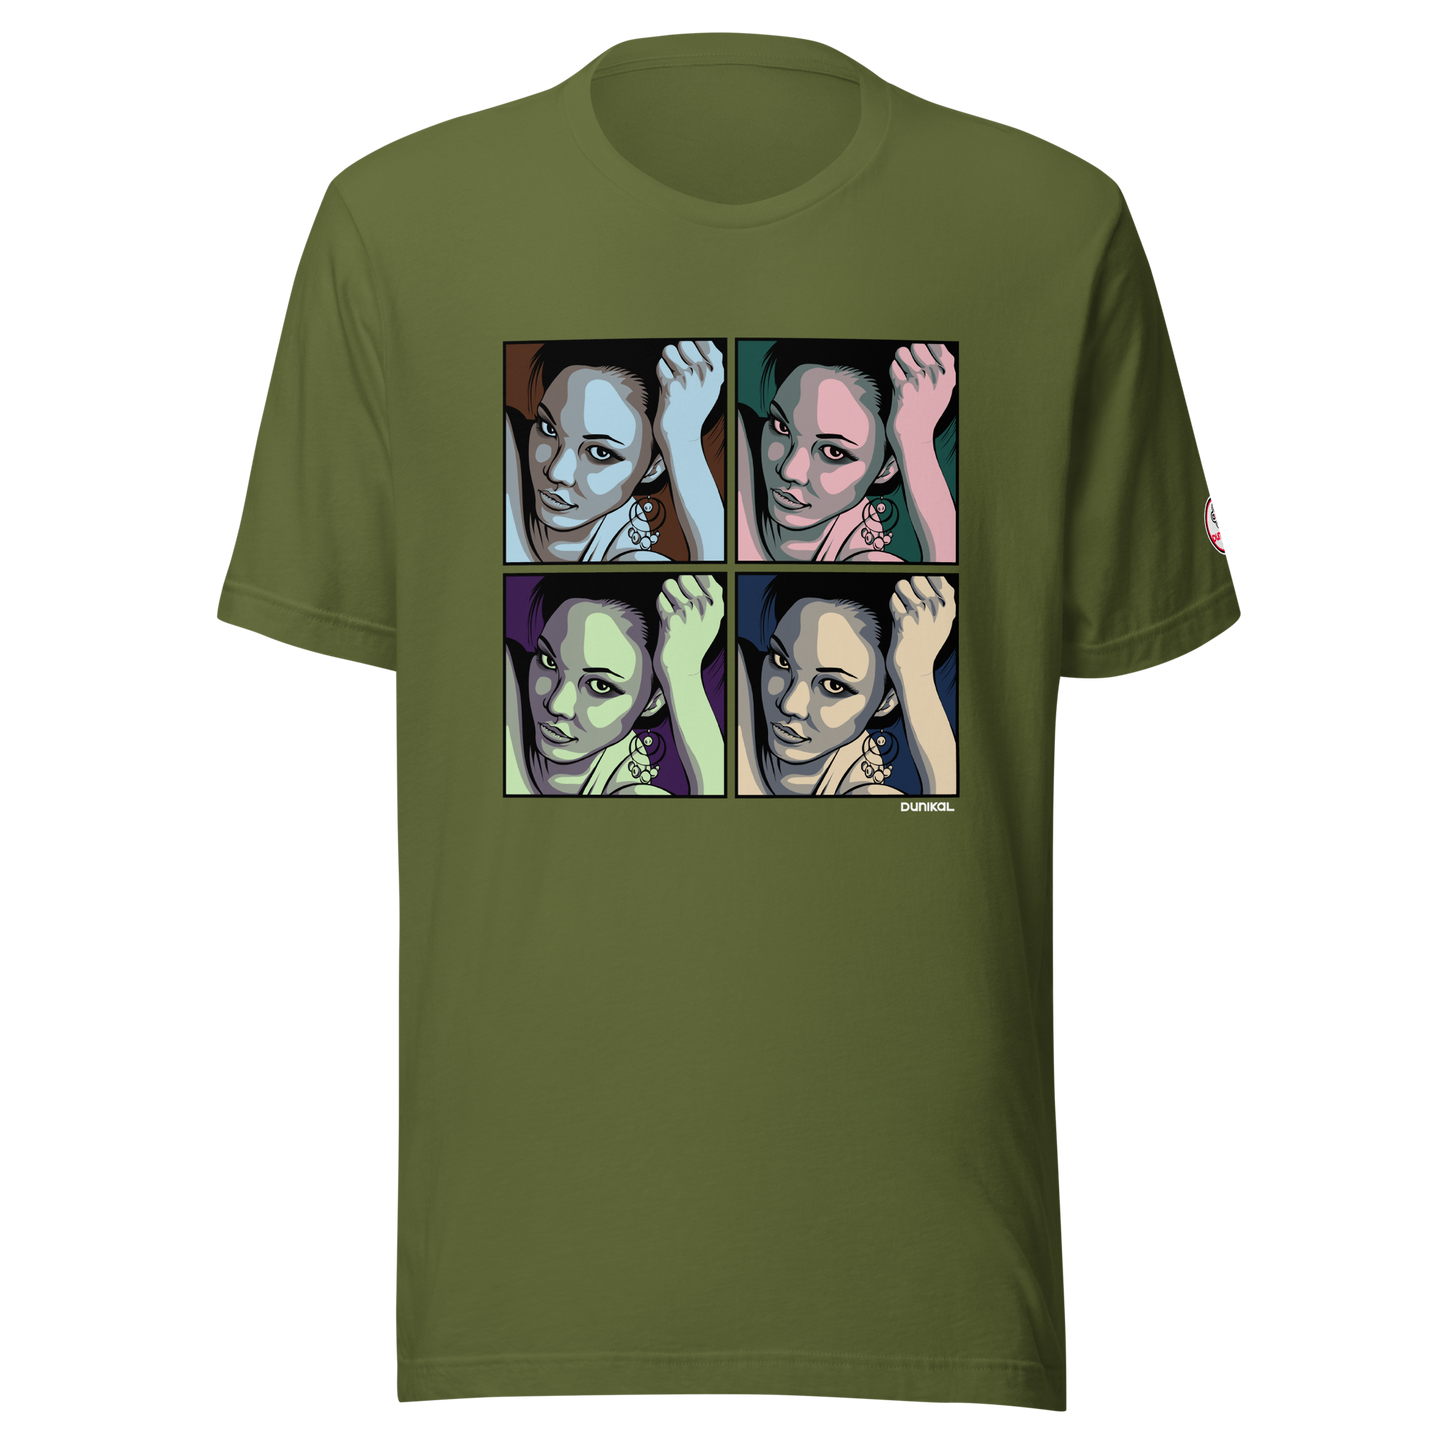 Unisex t-shirt ❯ Femme fatales wear Crayola ❯ Four Seasons